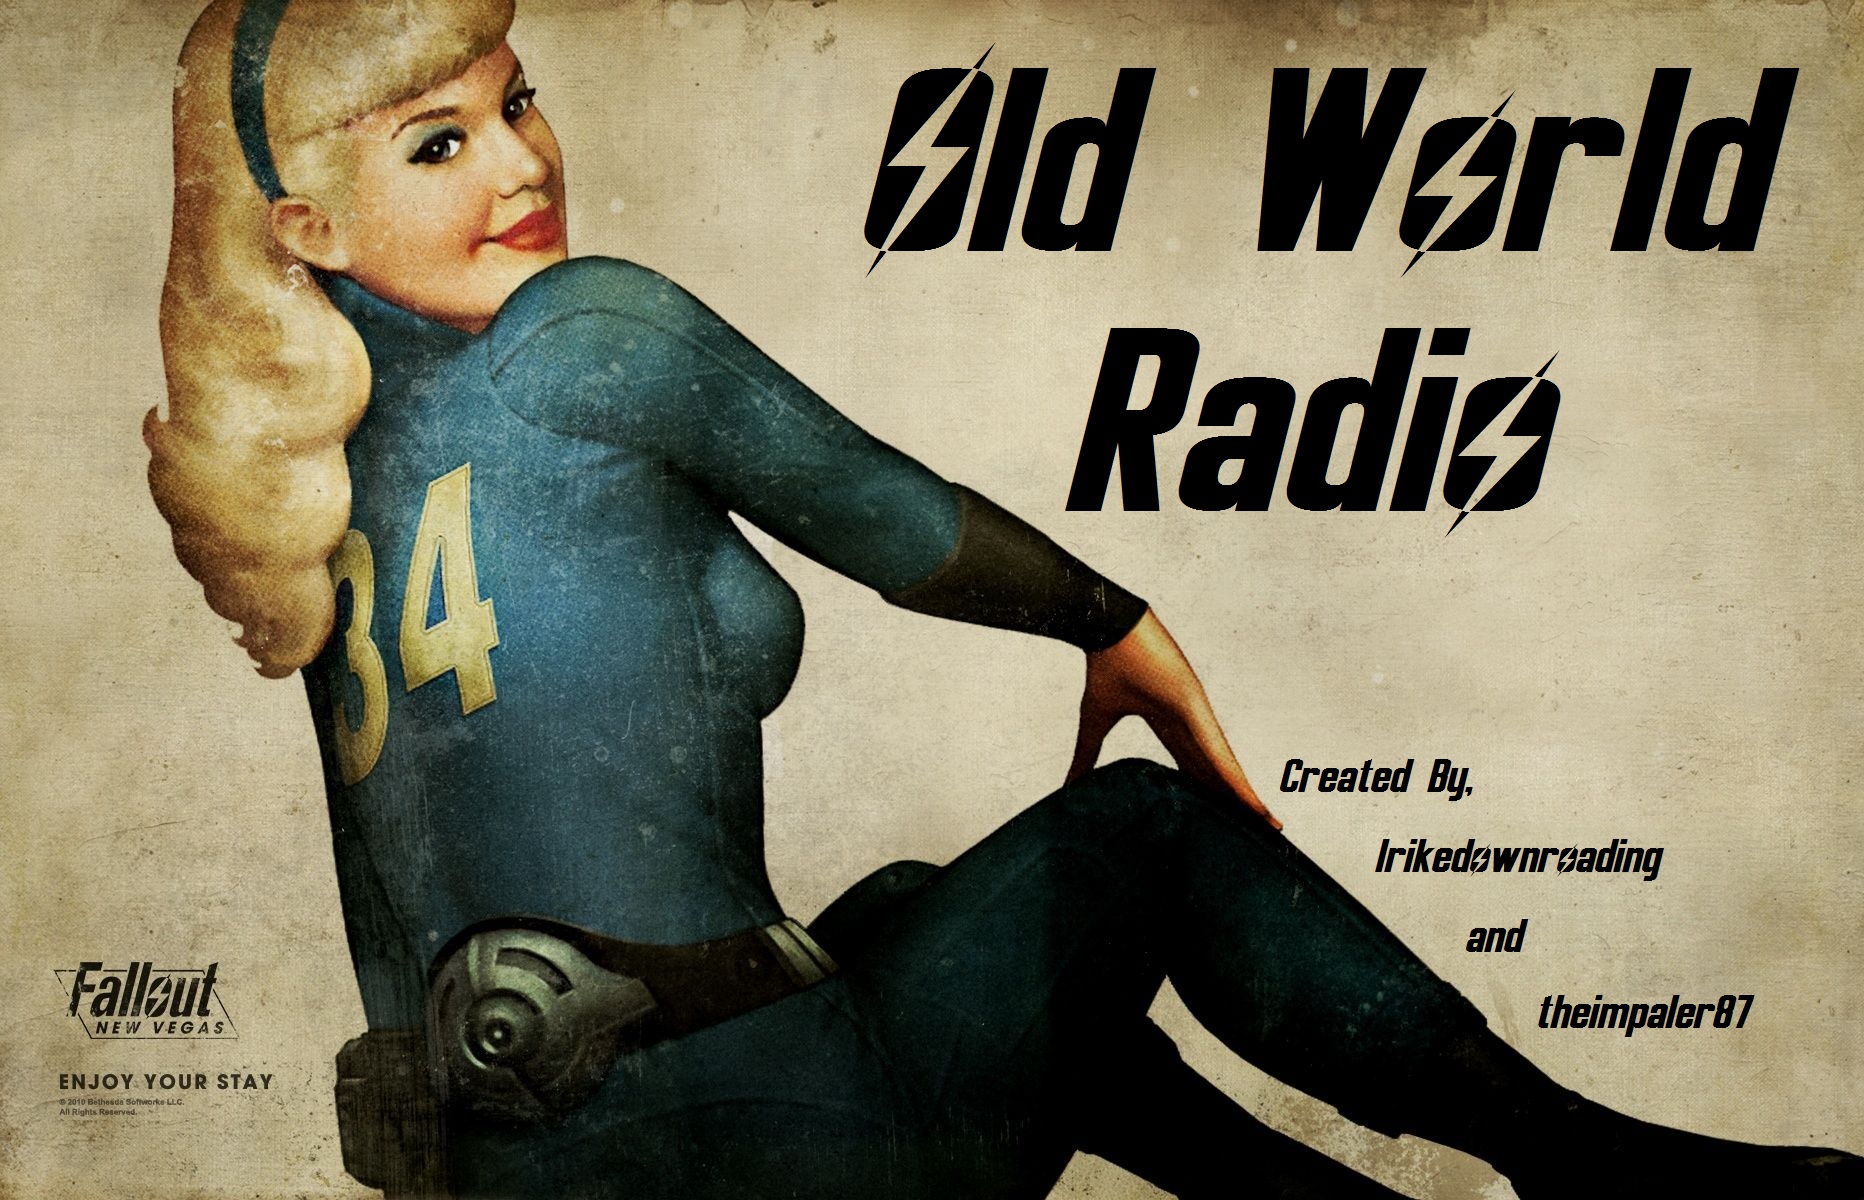 Suave Predicar Rebotar Old World Radio mod for Fallout: New Vegas - Mod DB